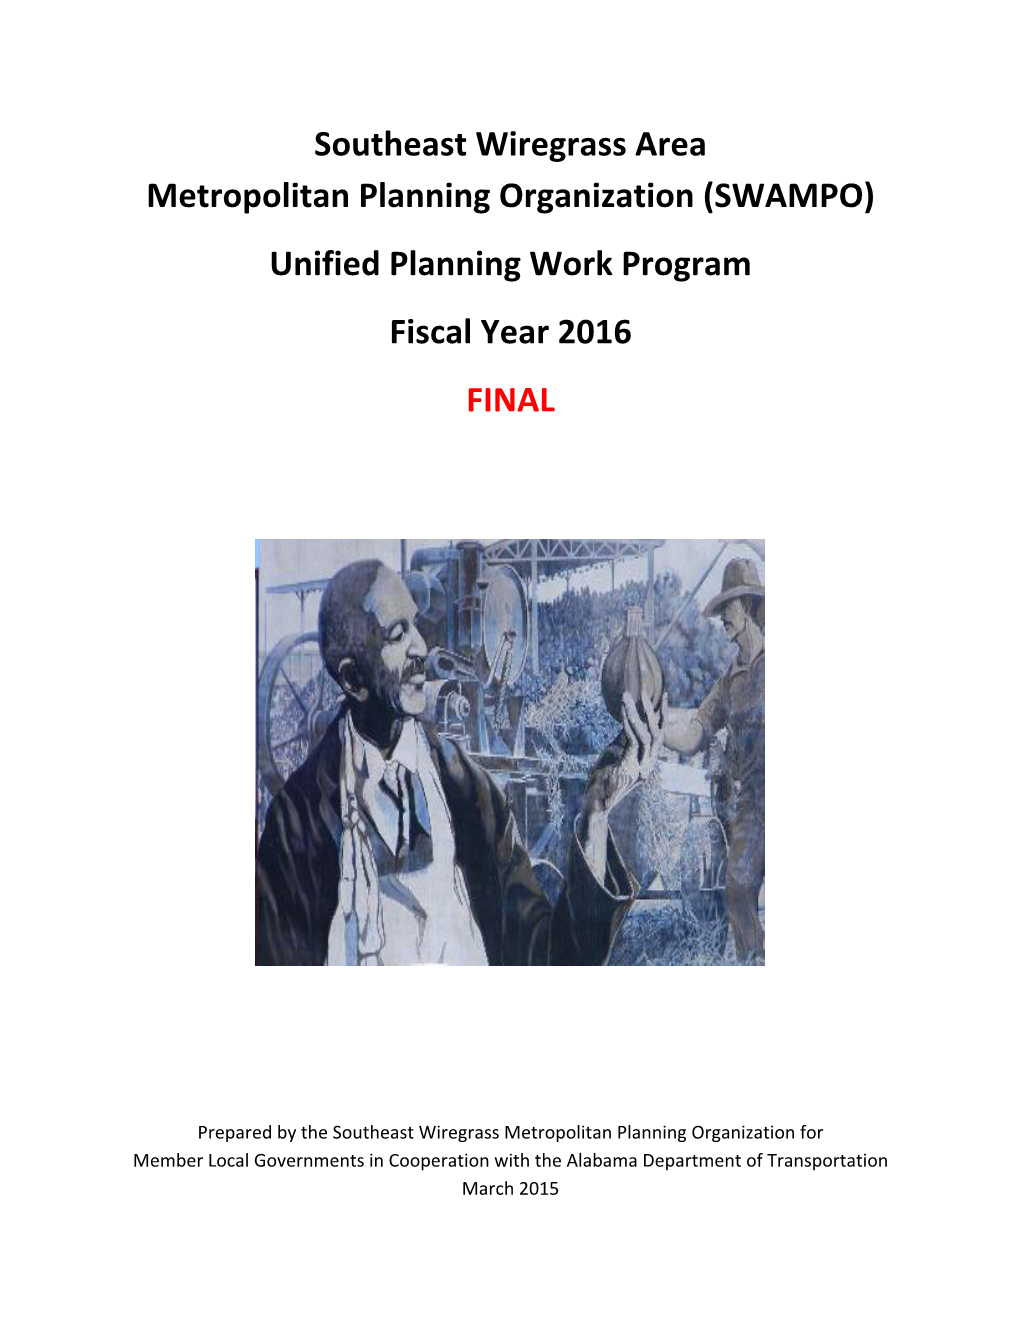 Southeast Wiregrass Area Metropolitan Planning Organization (SWAMPO) Unified Planning Work Program Fiscal Year 2016 FINAL